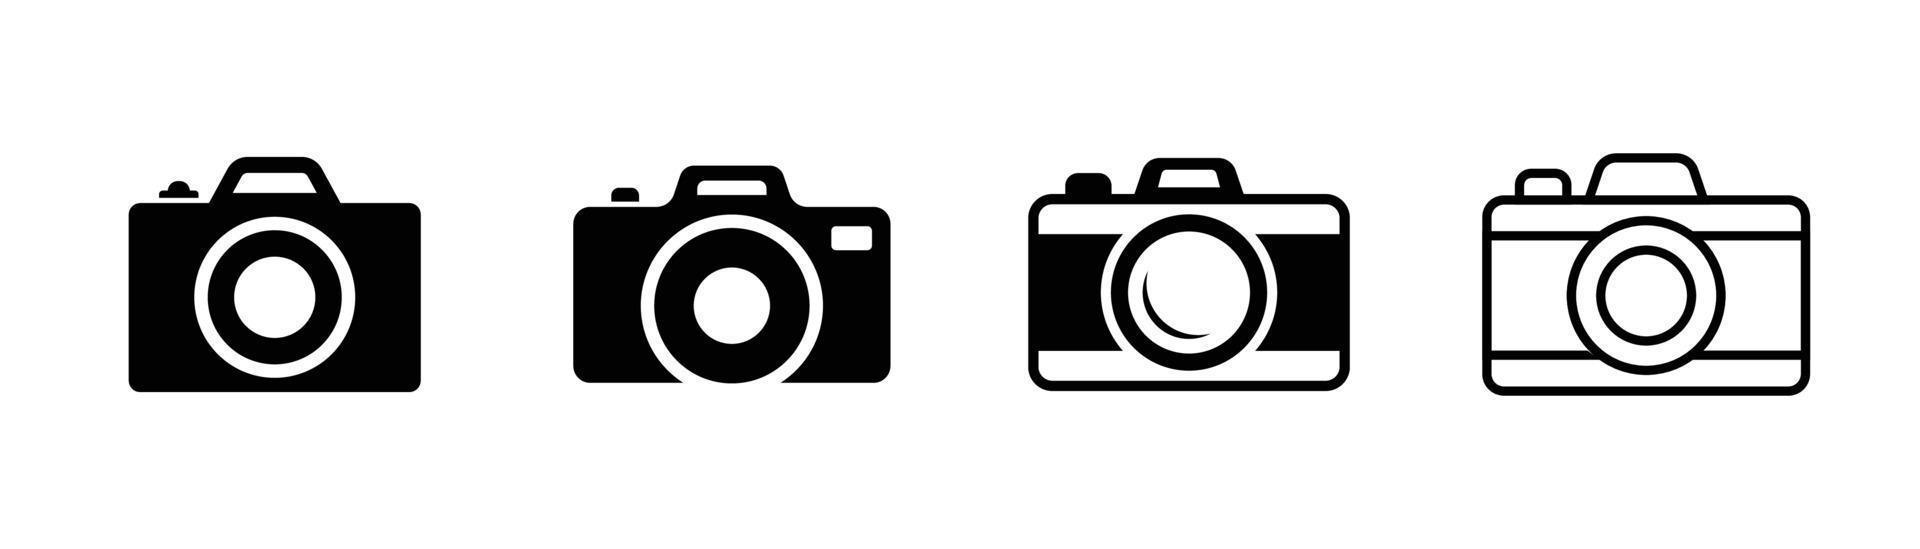 Camera icon design element suitable for website, print design or app vector